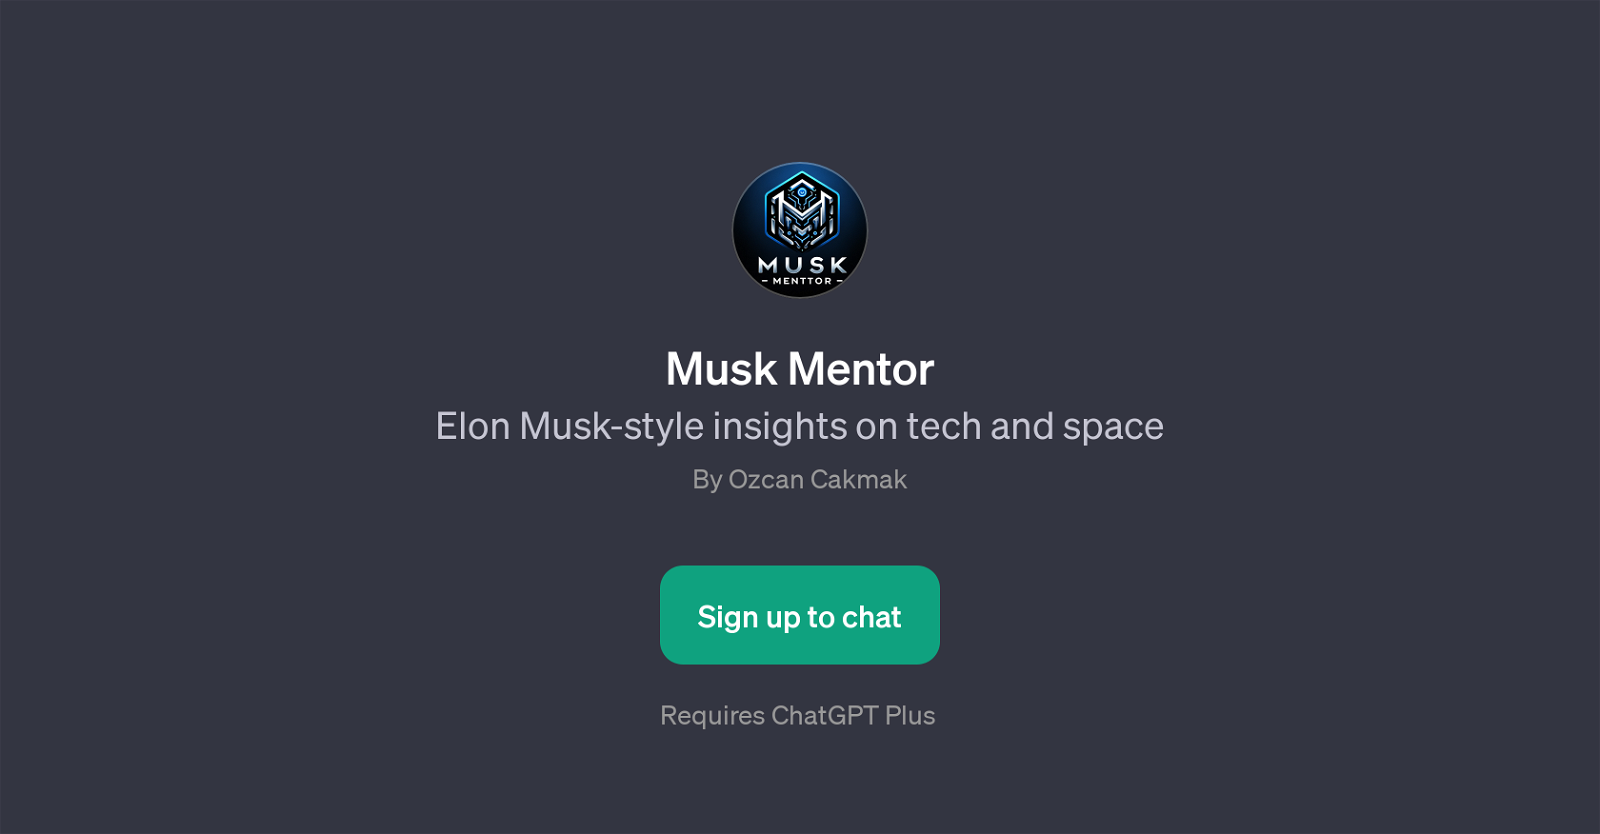 Musk Mentor website